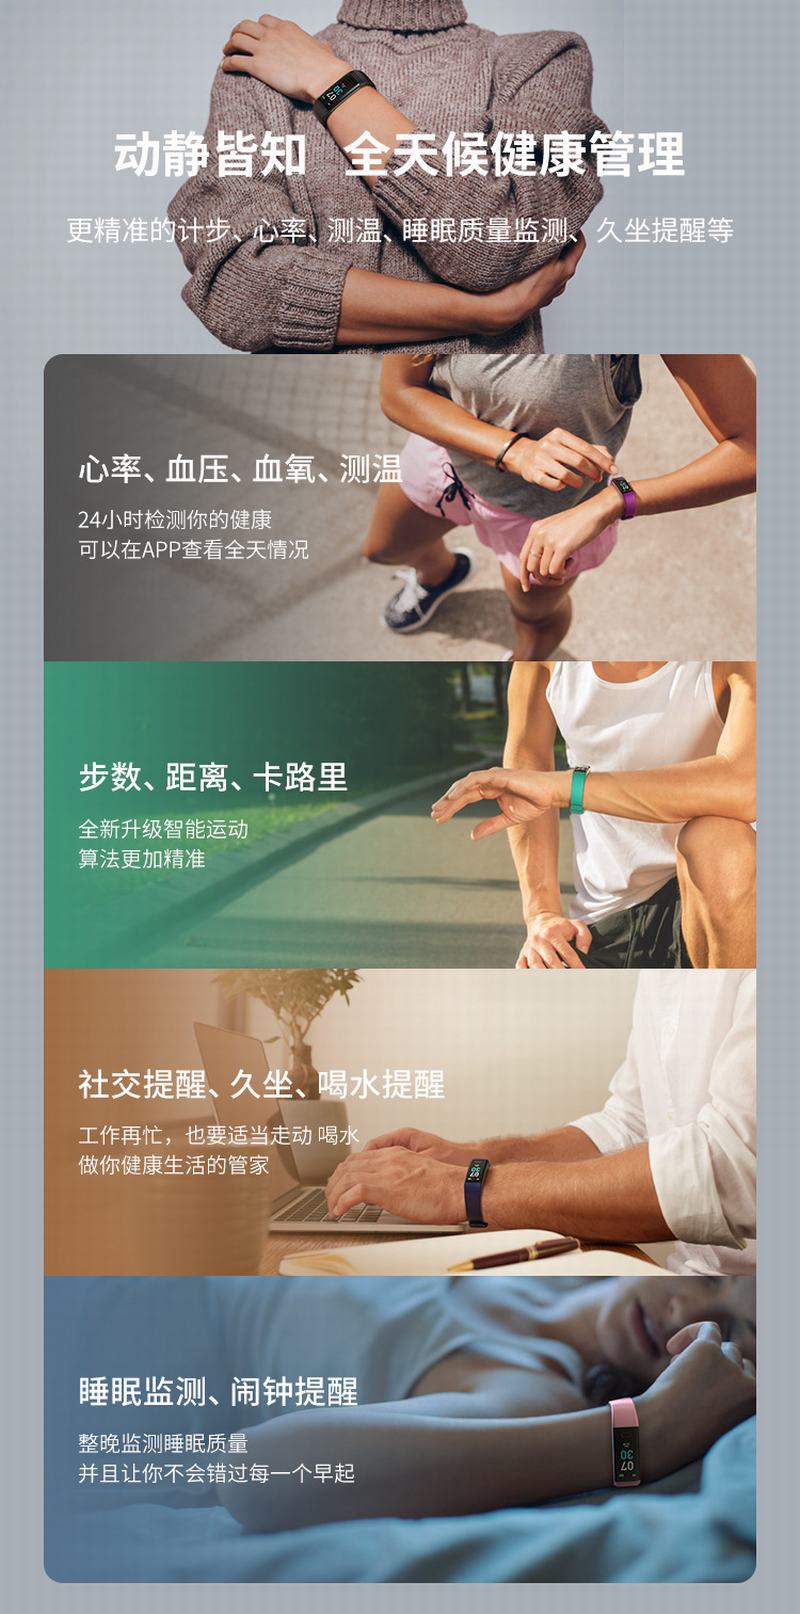 Runmifit women's health bracelet exercise heart rate meter step temperature SDK customized API smart Bracelet factory